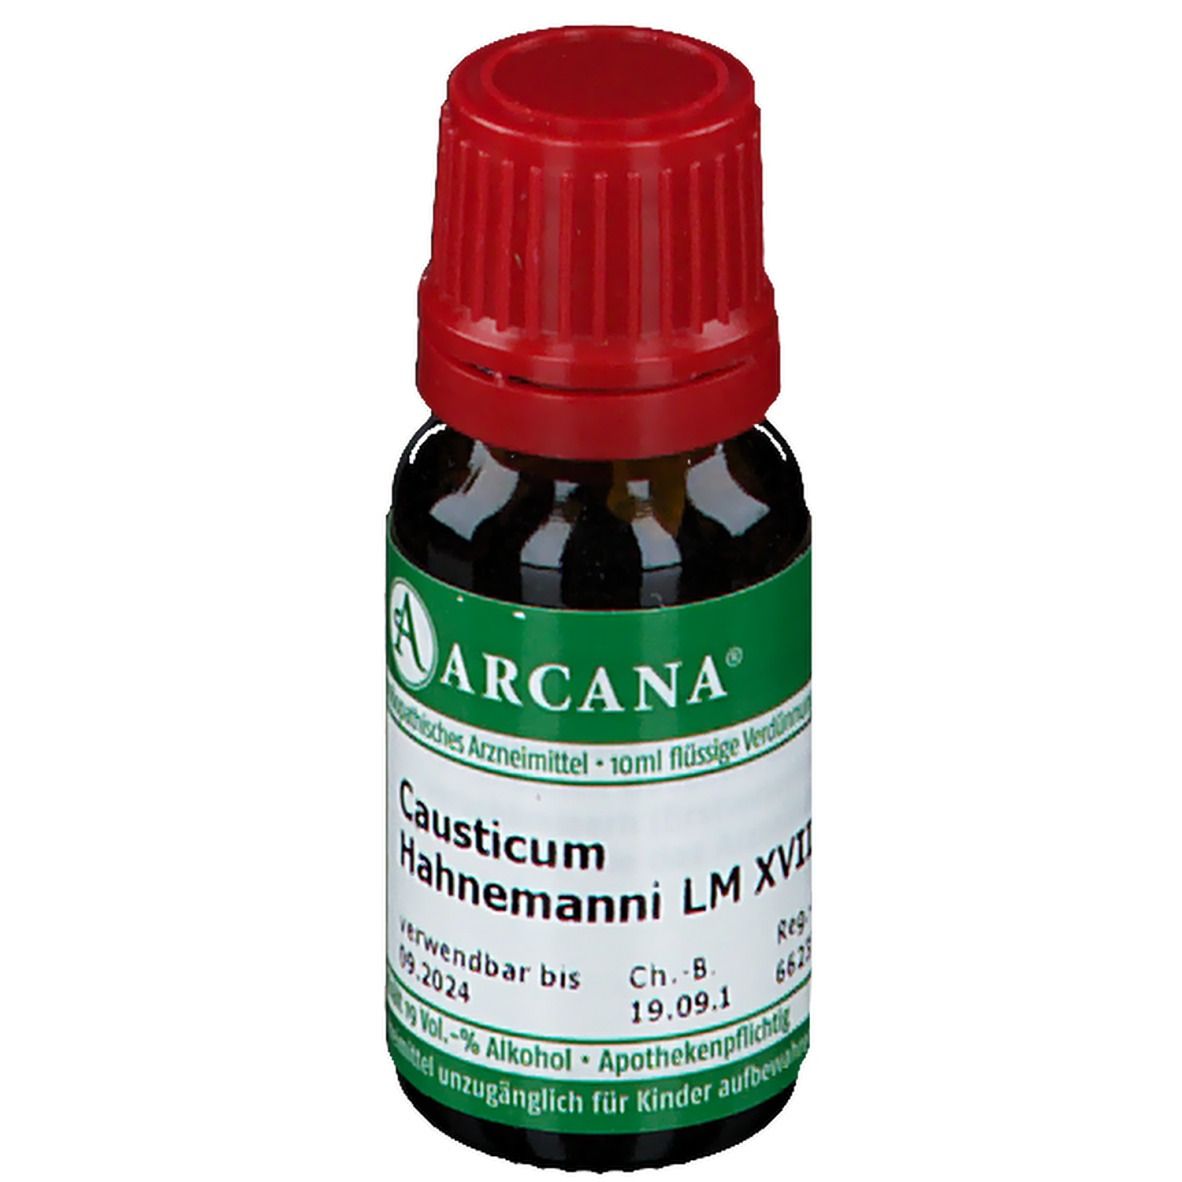 ARCANA® Causticum Hahnemanni LM XVIII